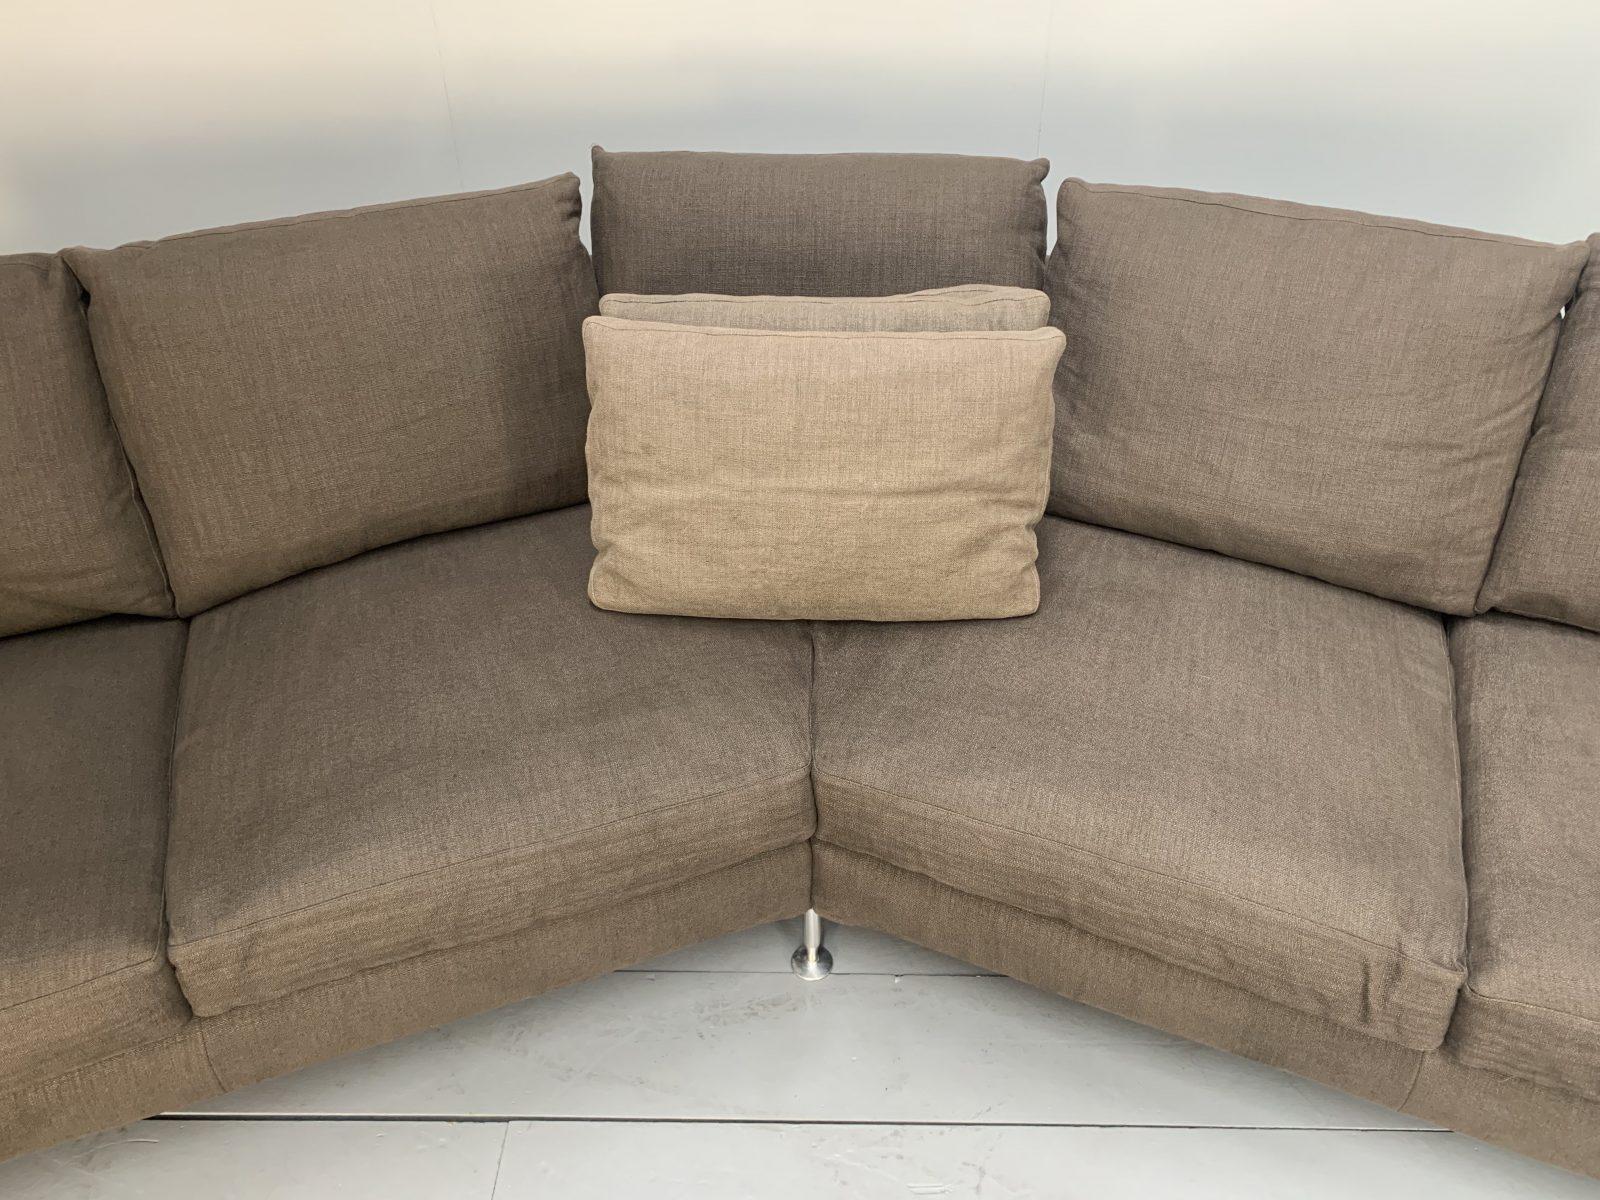 B&B Italia “Harry HL375” 5-Seat Sofa in Dark Brown Linen For Sale 1